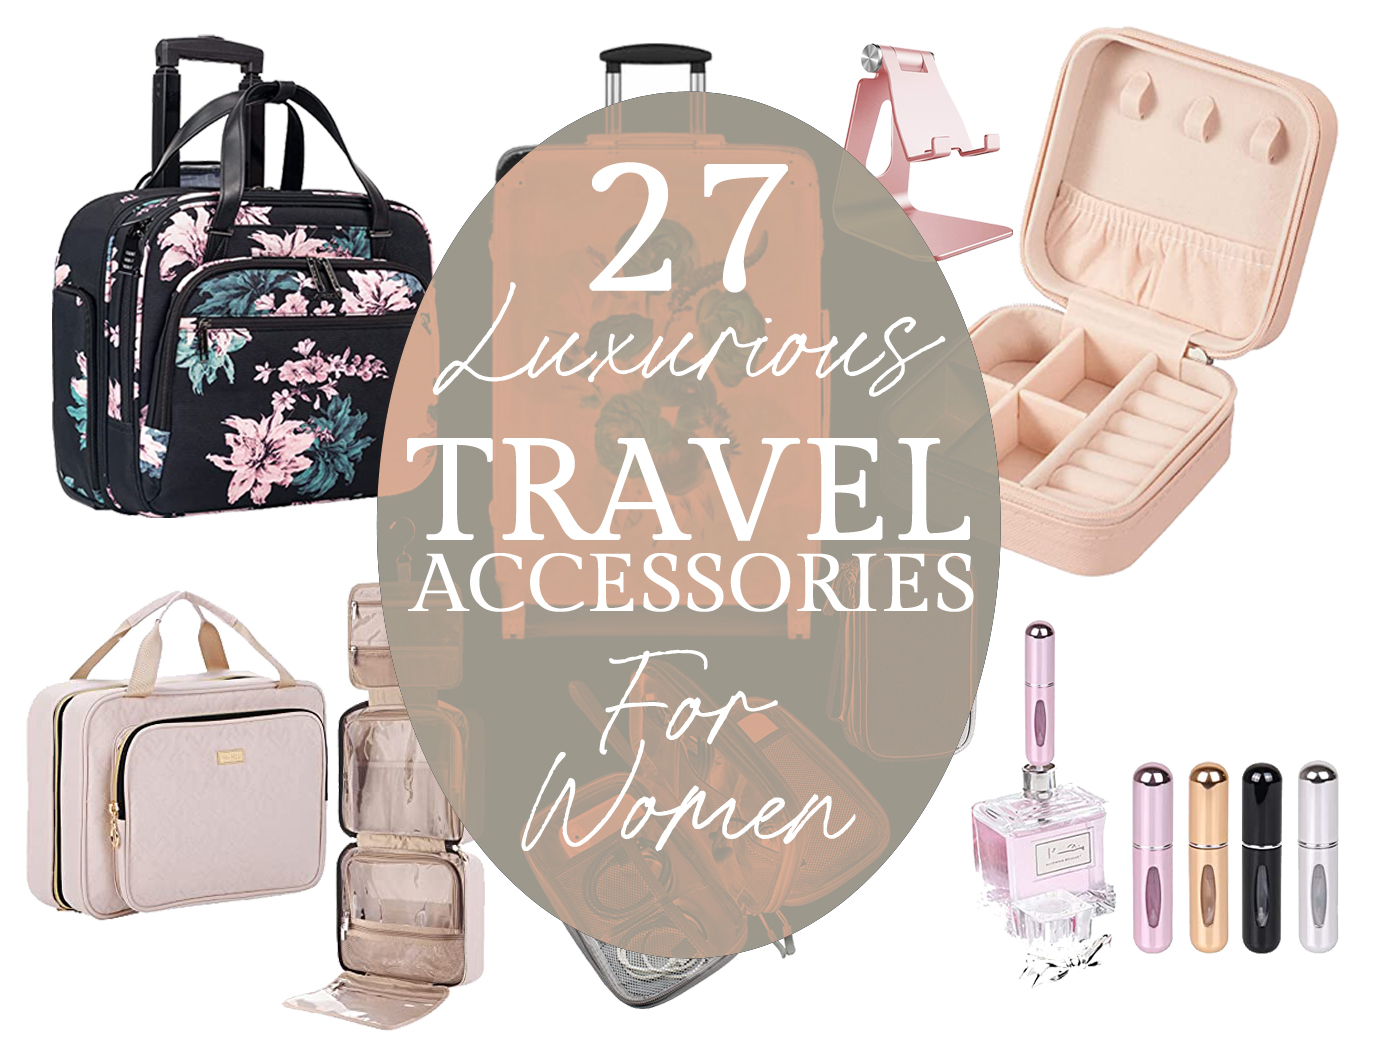 Travel Accessories for Women - 27 Luxurious Ideas - Danica De La Mora